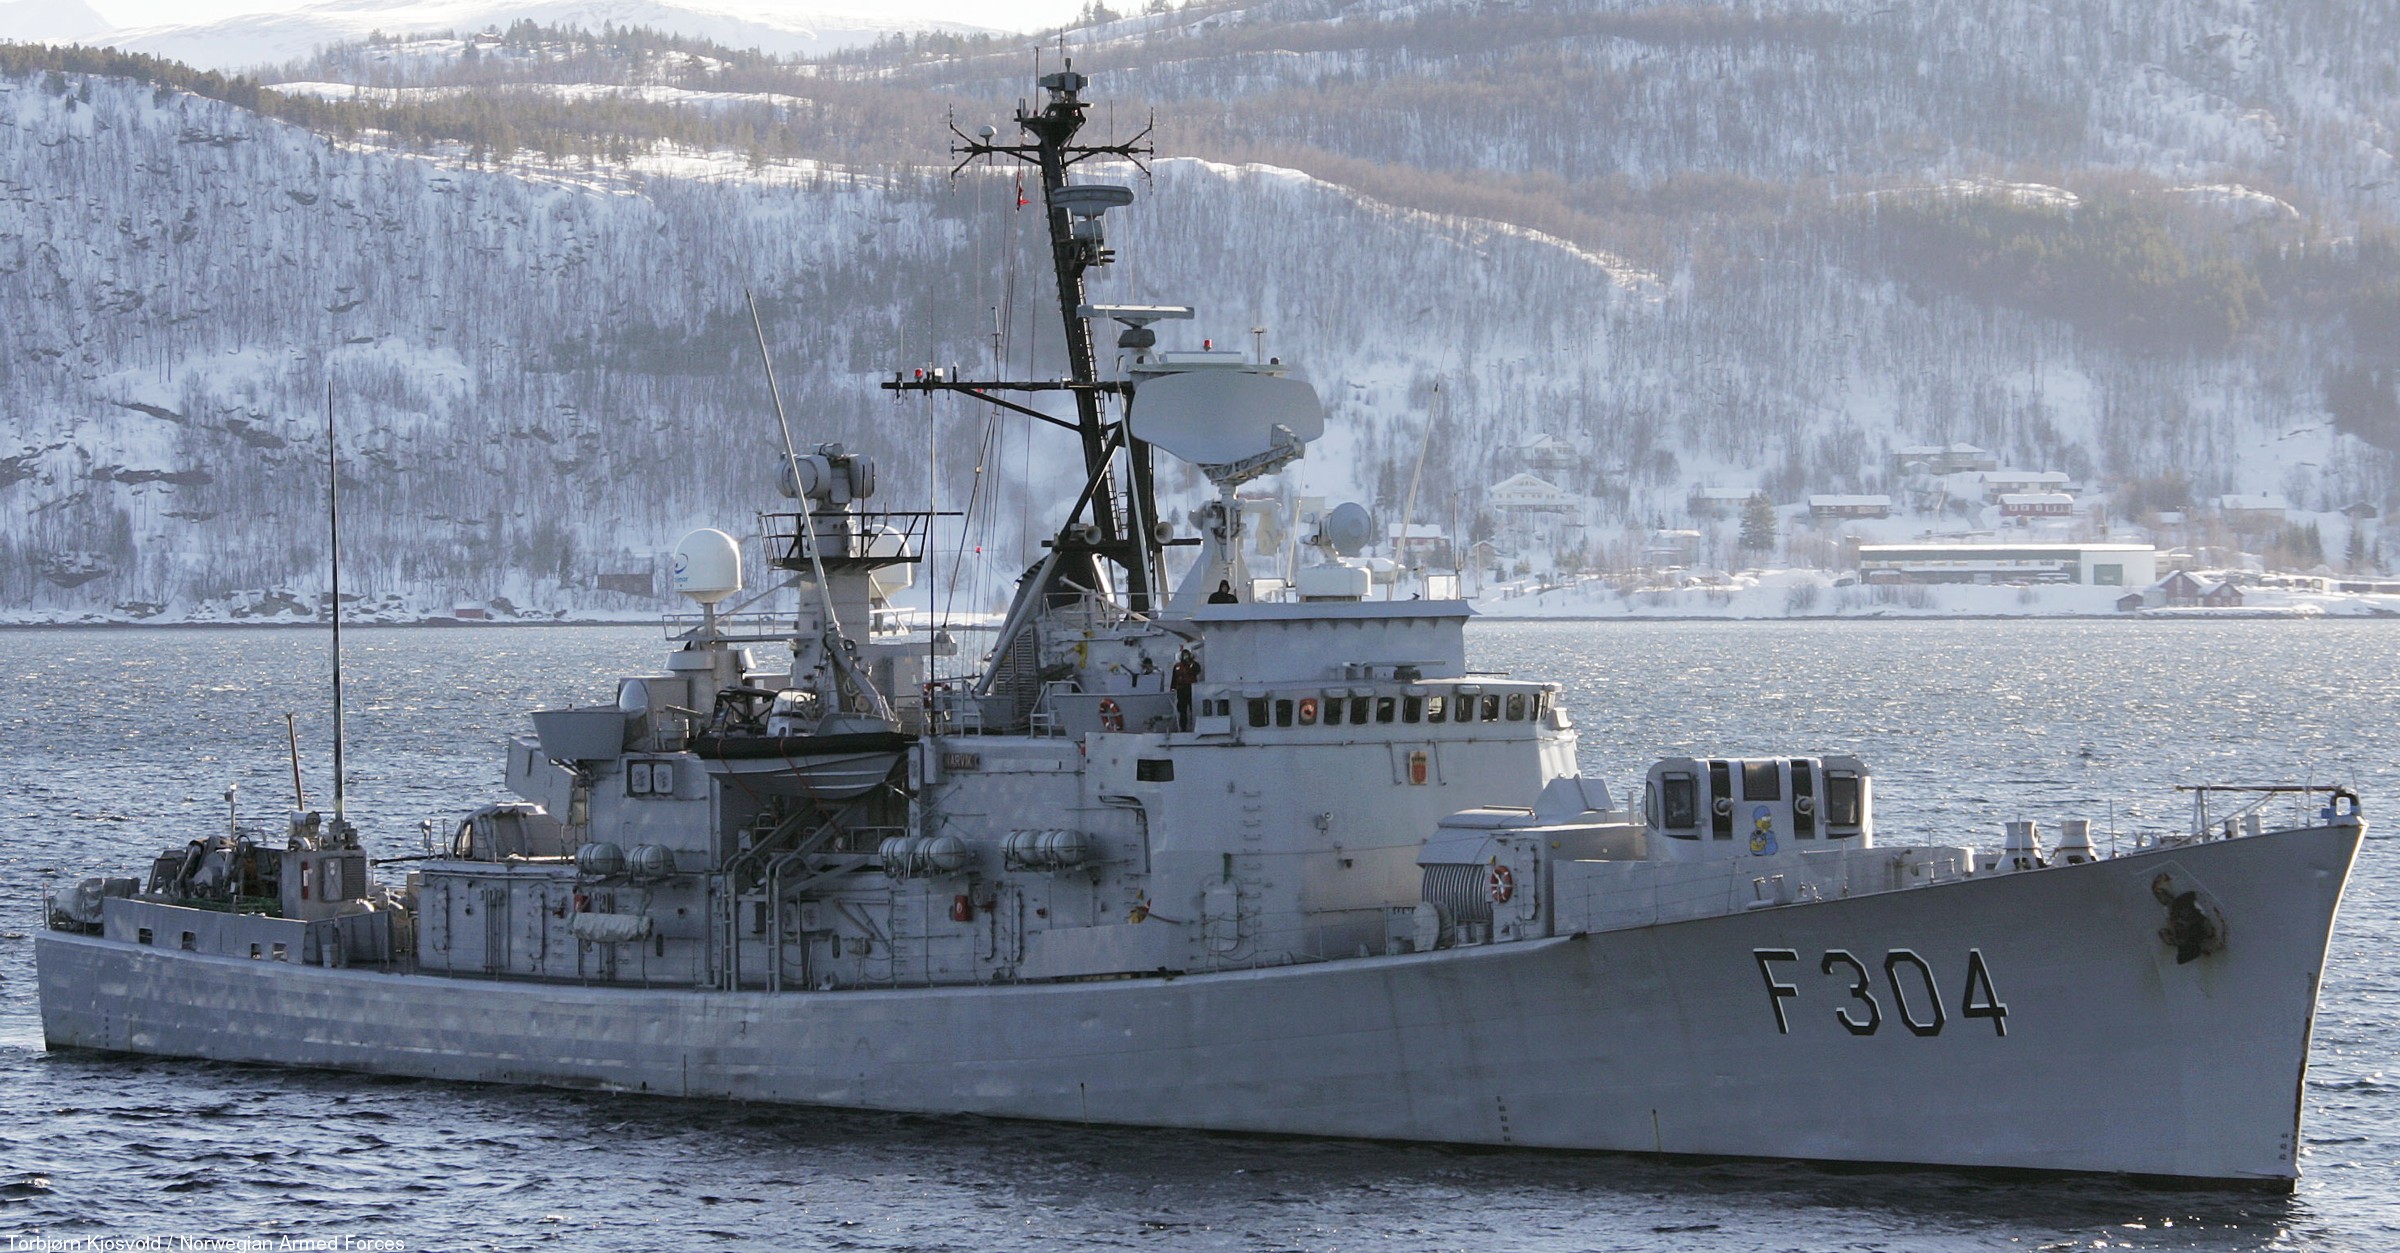 f-304 hnoms narvik knm oslo class frigate royal norwegian navy sjoforsvaret 07